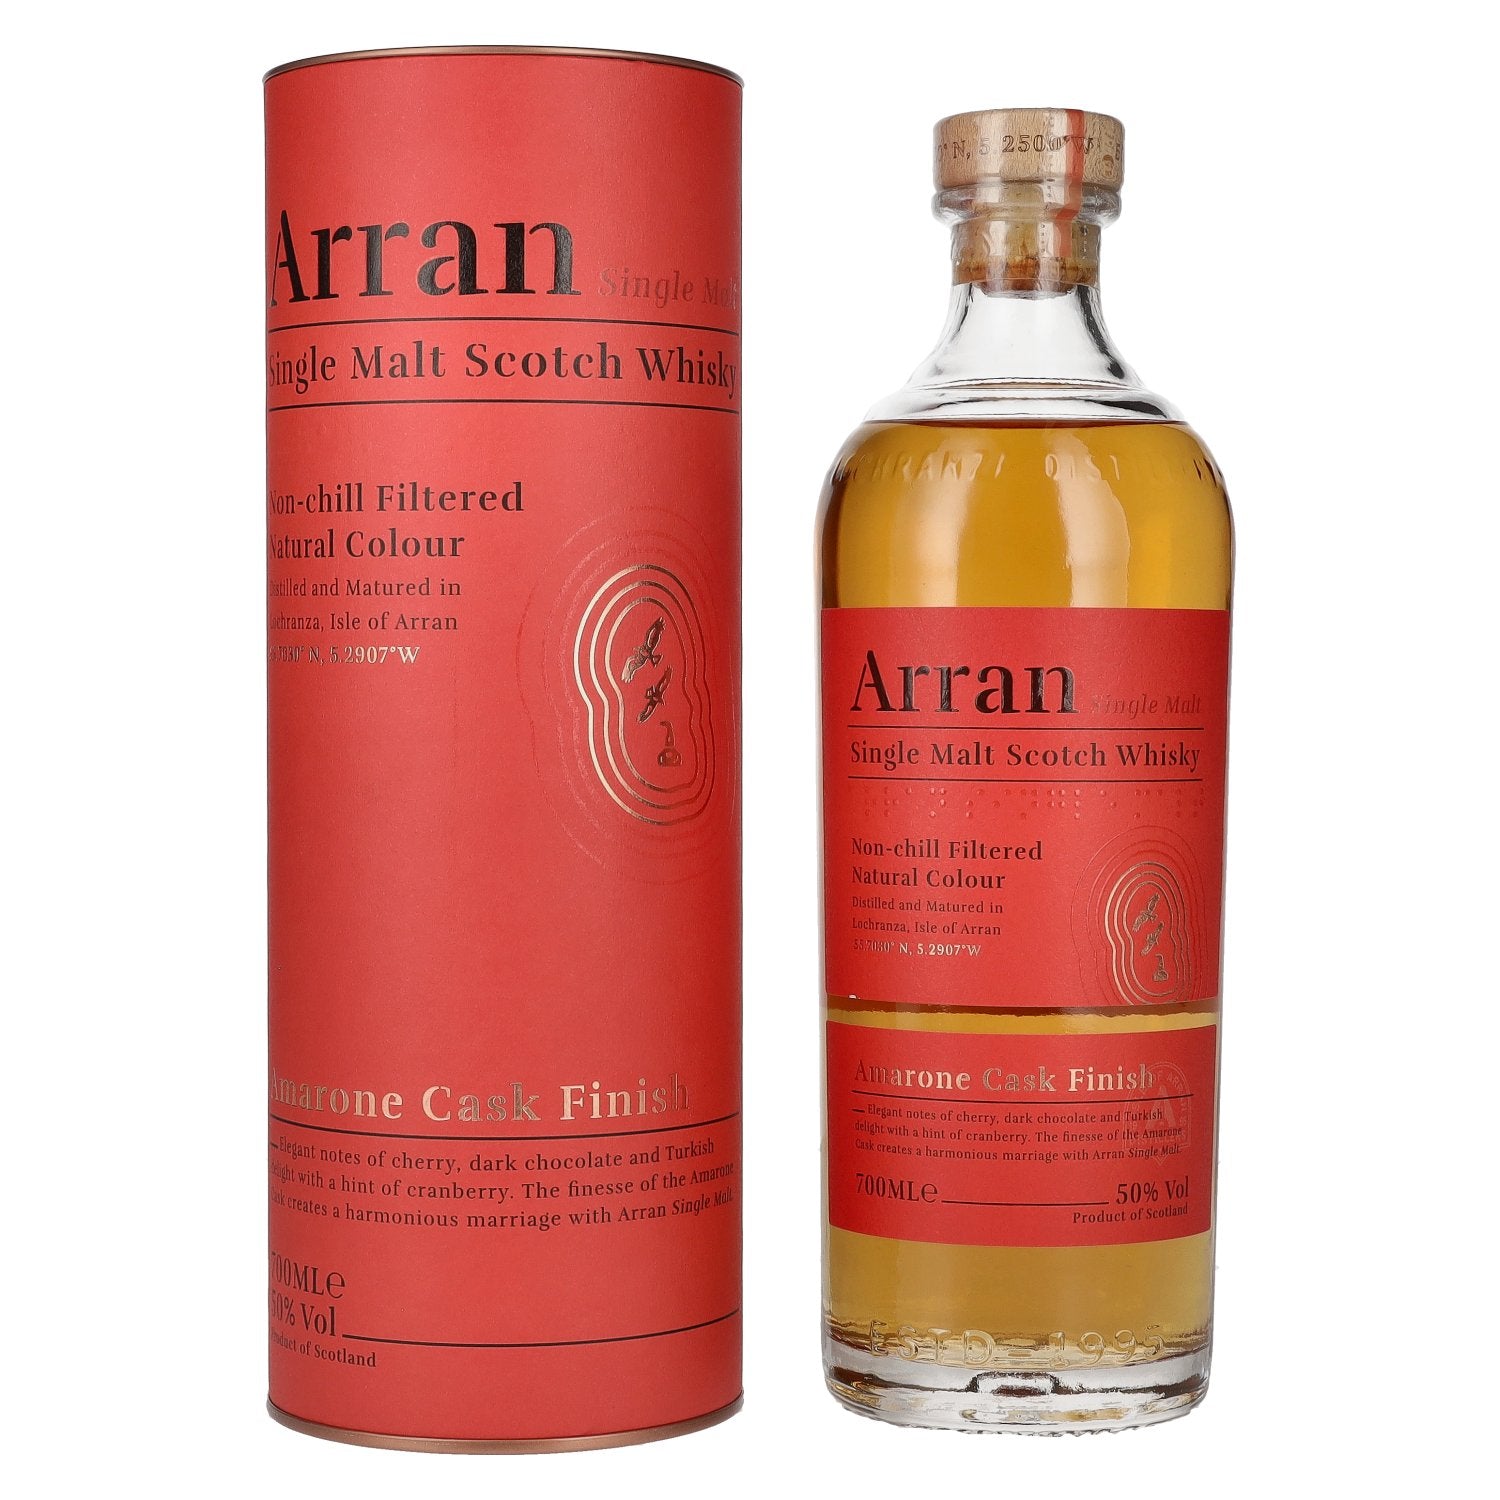 Arran Single Malt Scotch AMARONE CASK FINISH 50% Vol. 0,7l in Giftbox